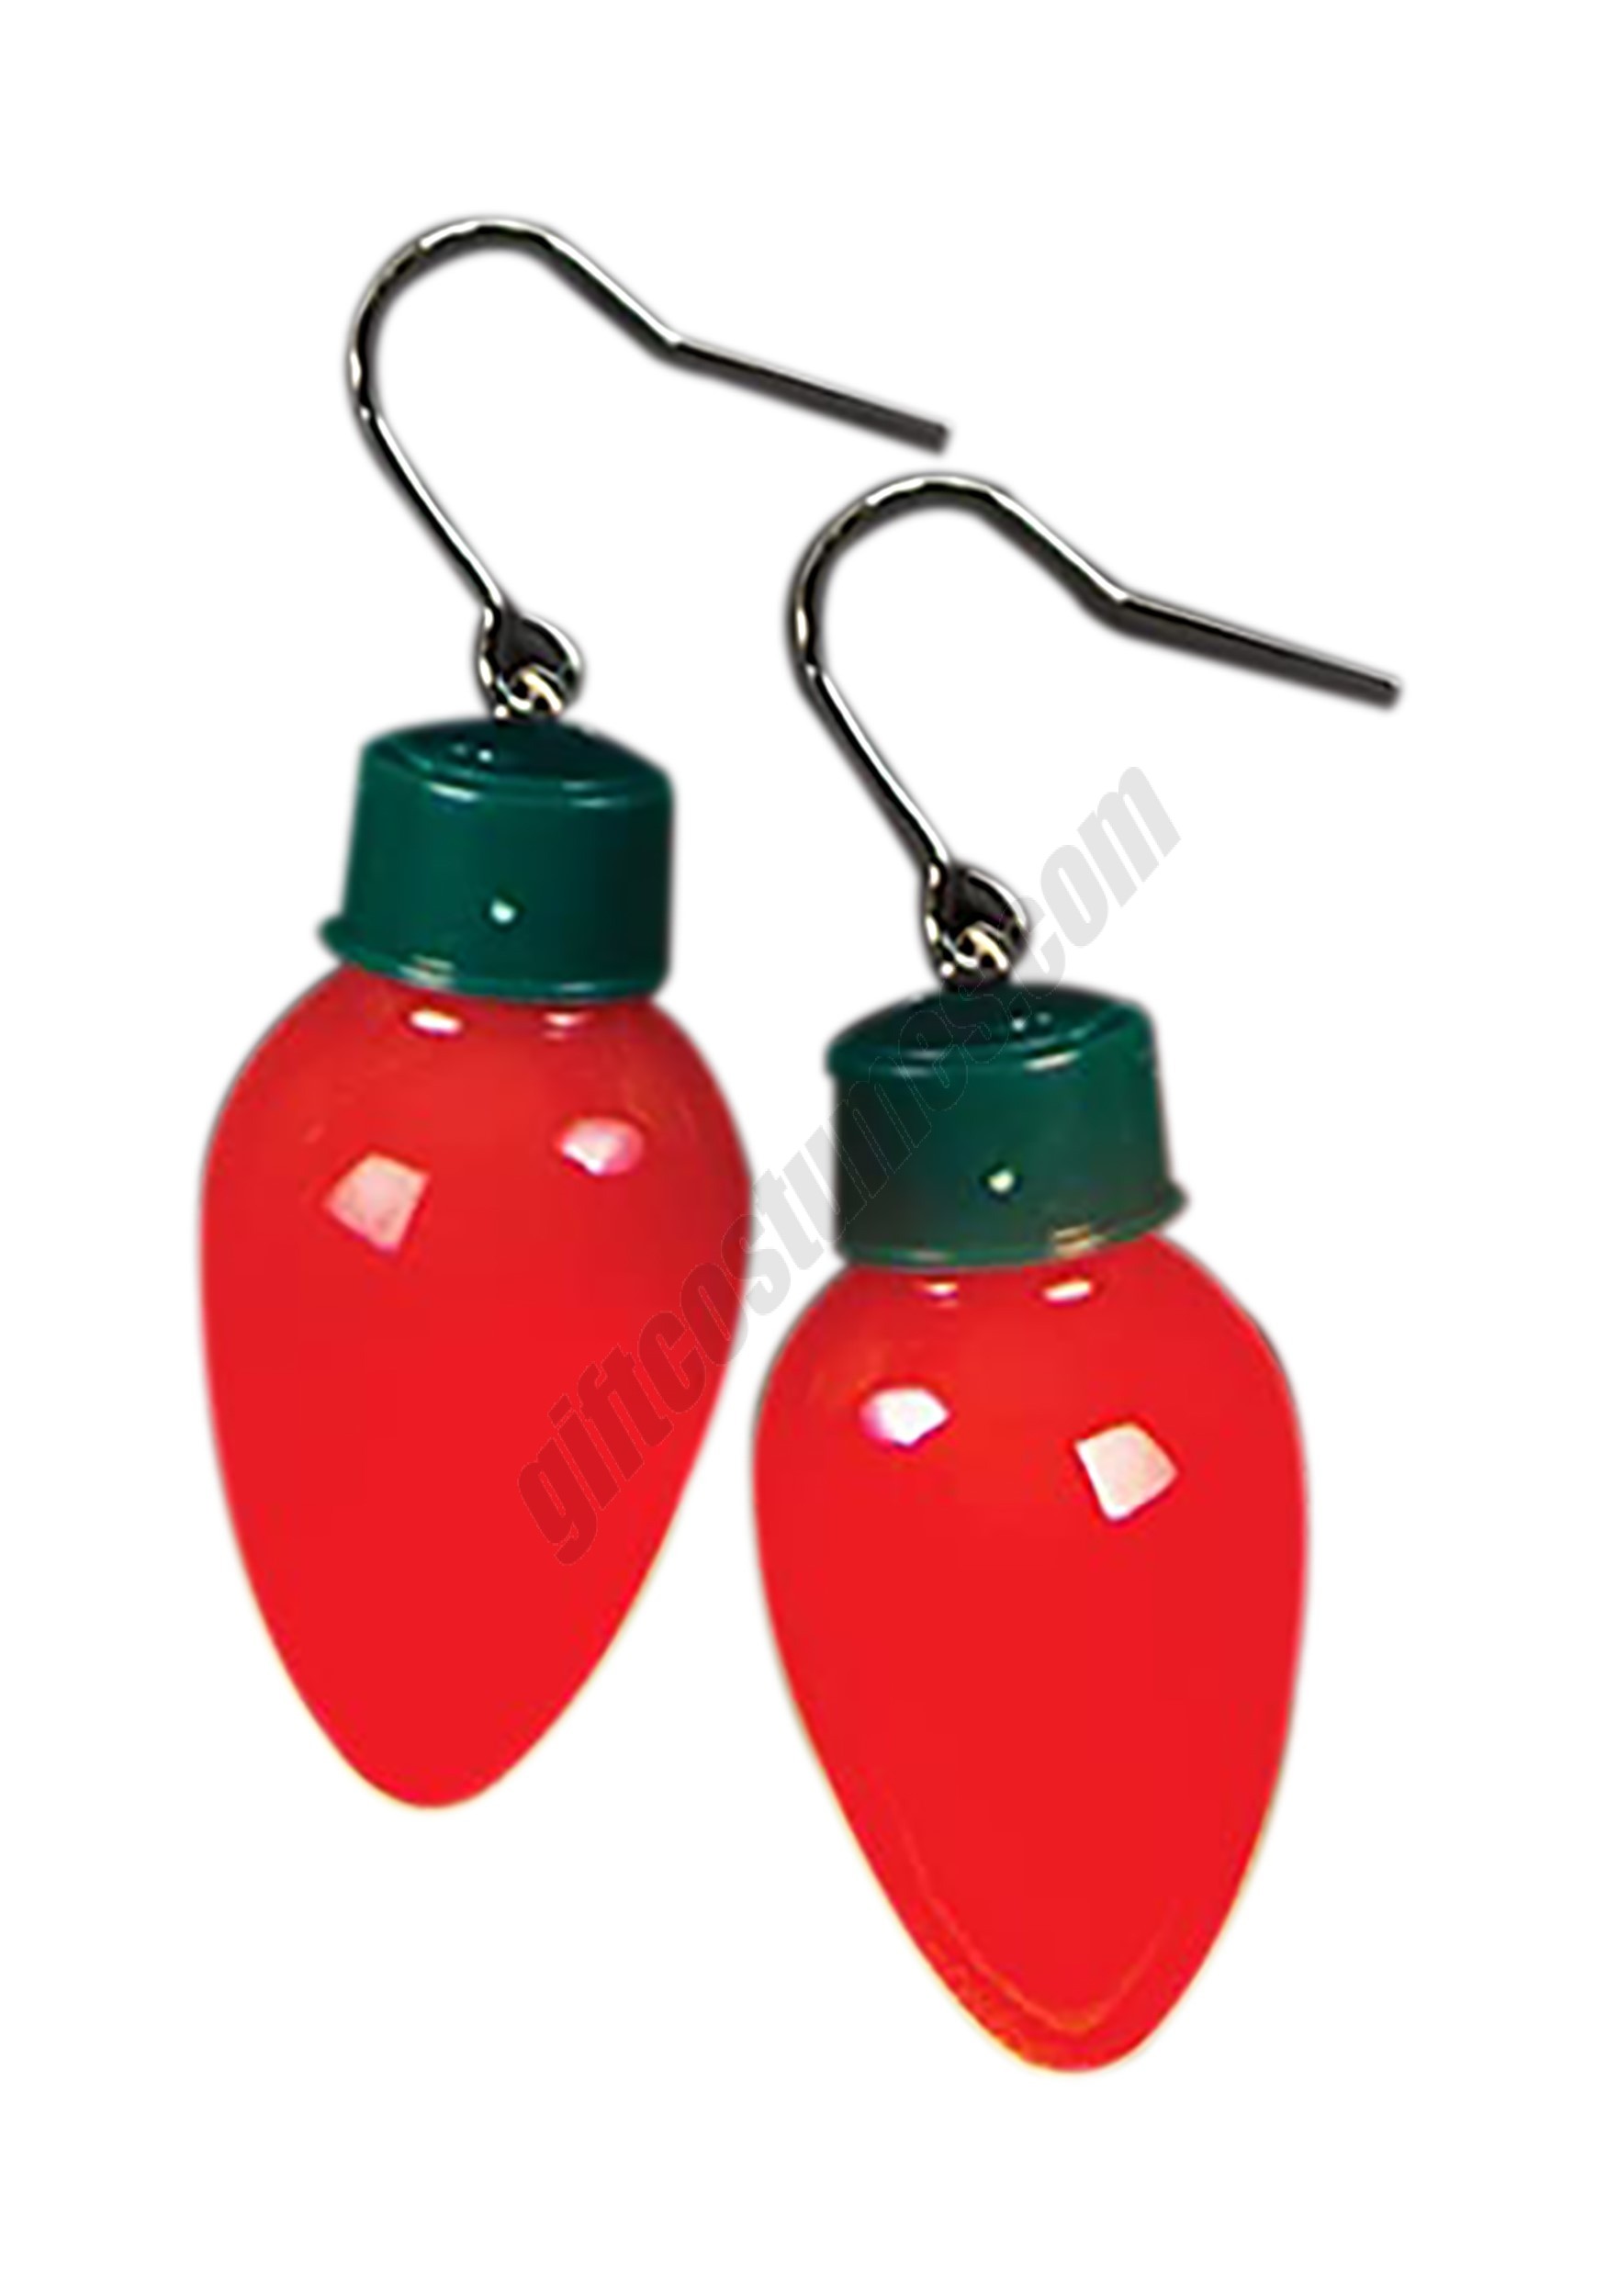 Light Up Christmas Bulb Earrings Promotions - Light Up Christmas Bulb Earrings Promotions